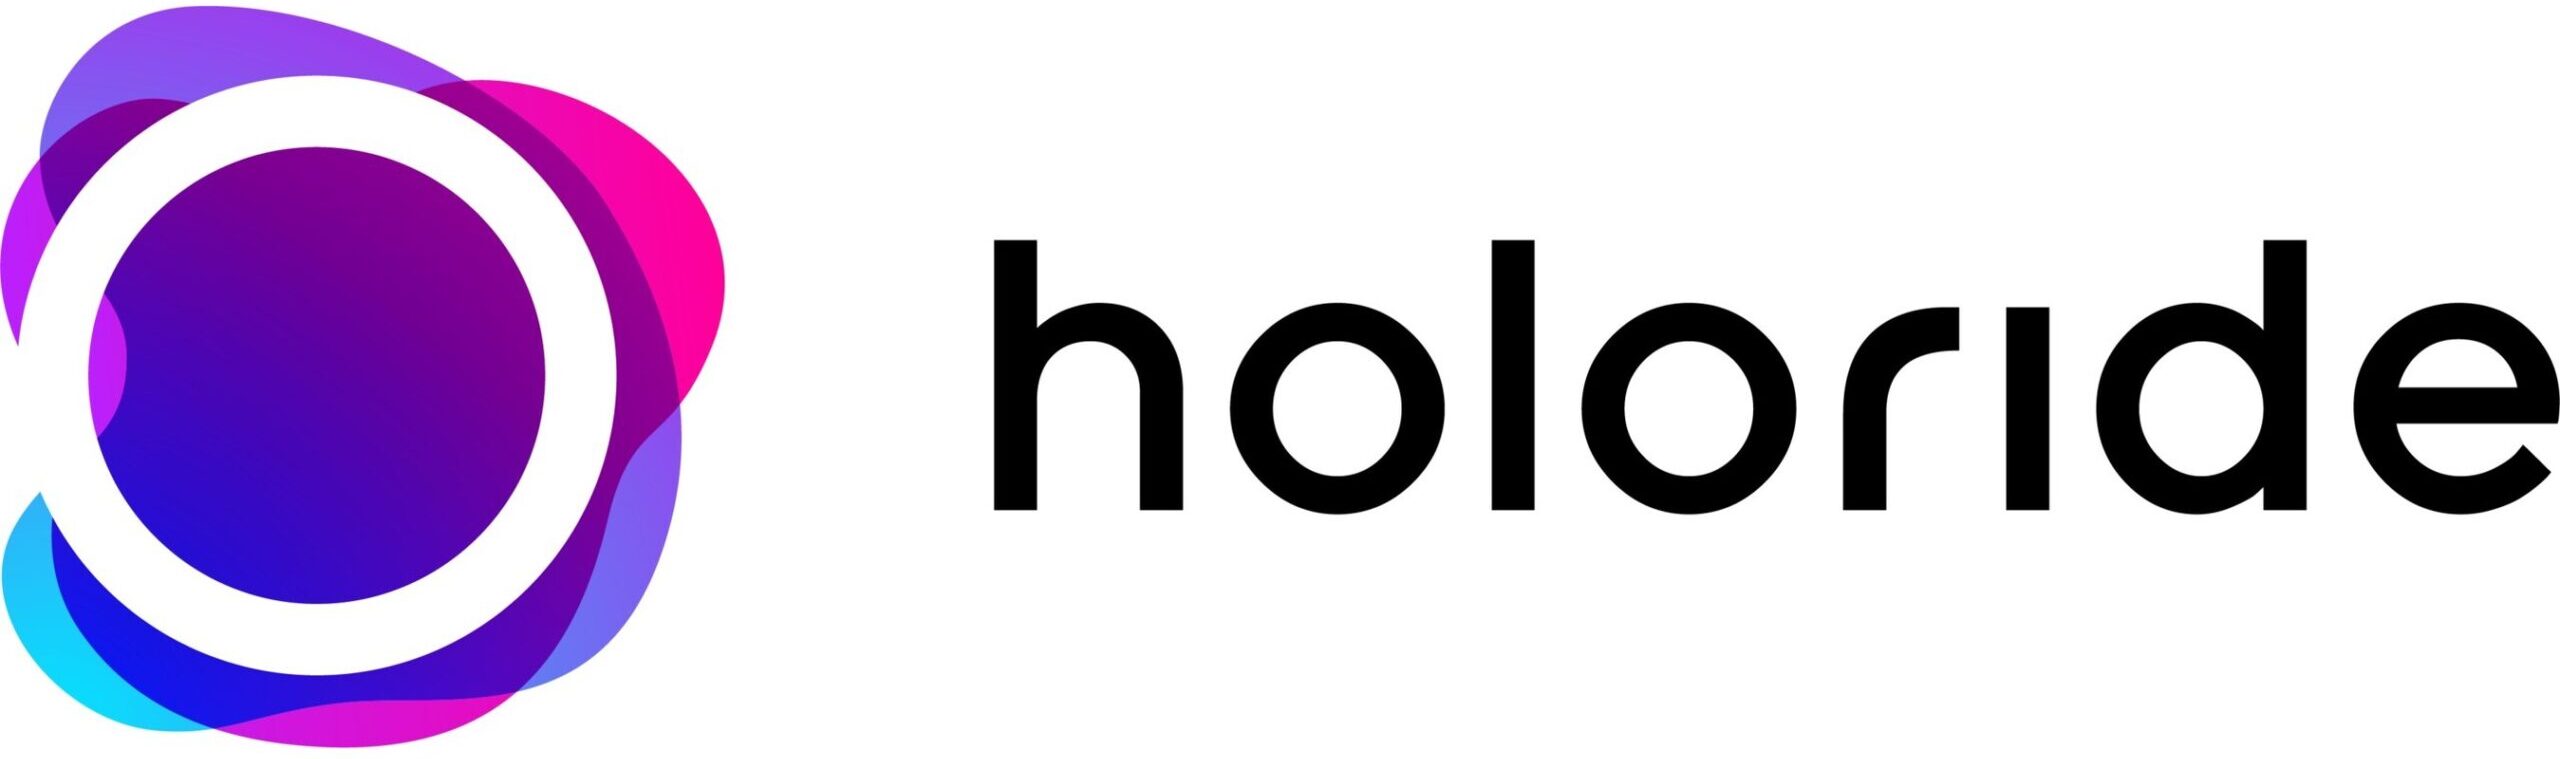 Holoride Logo